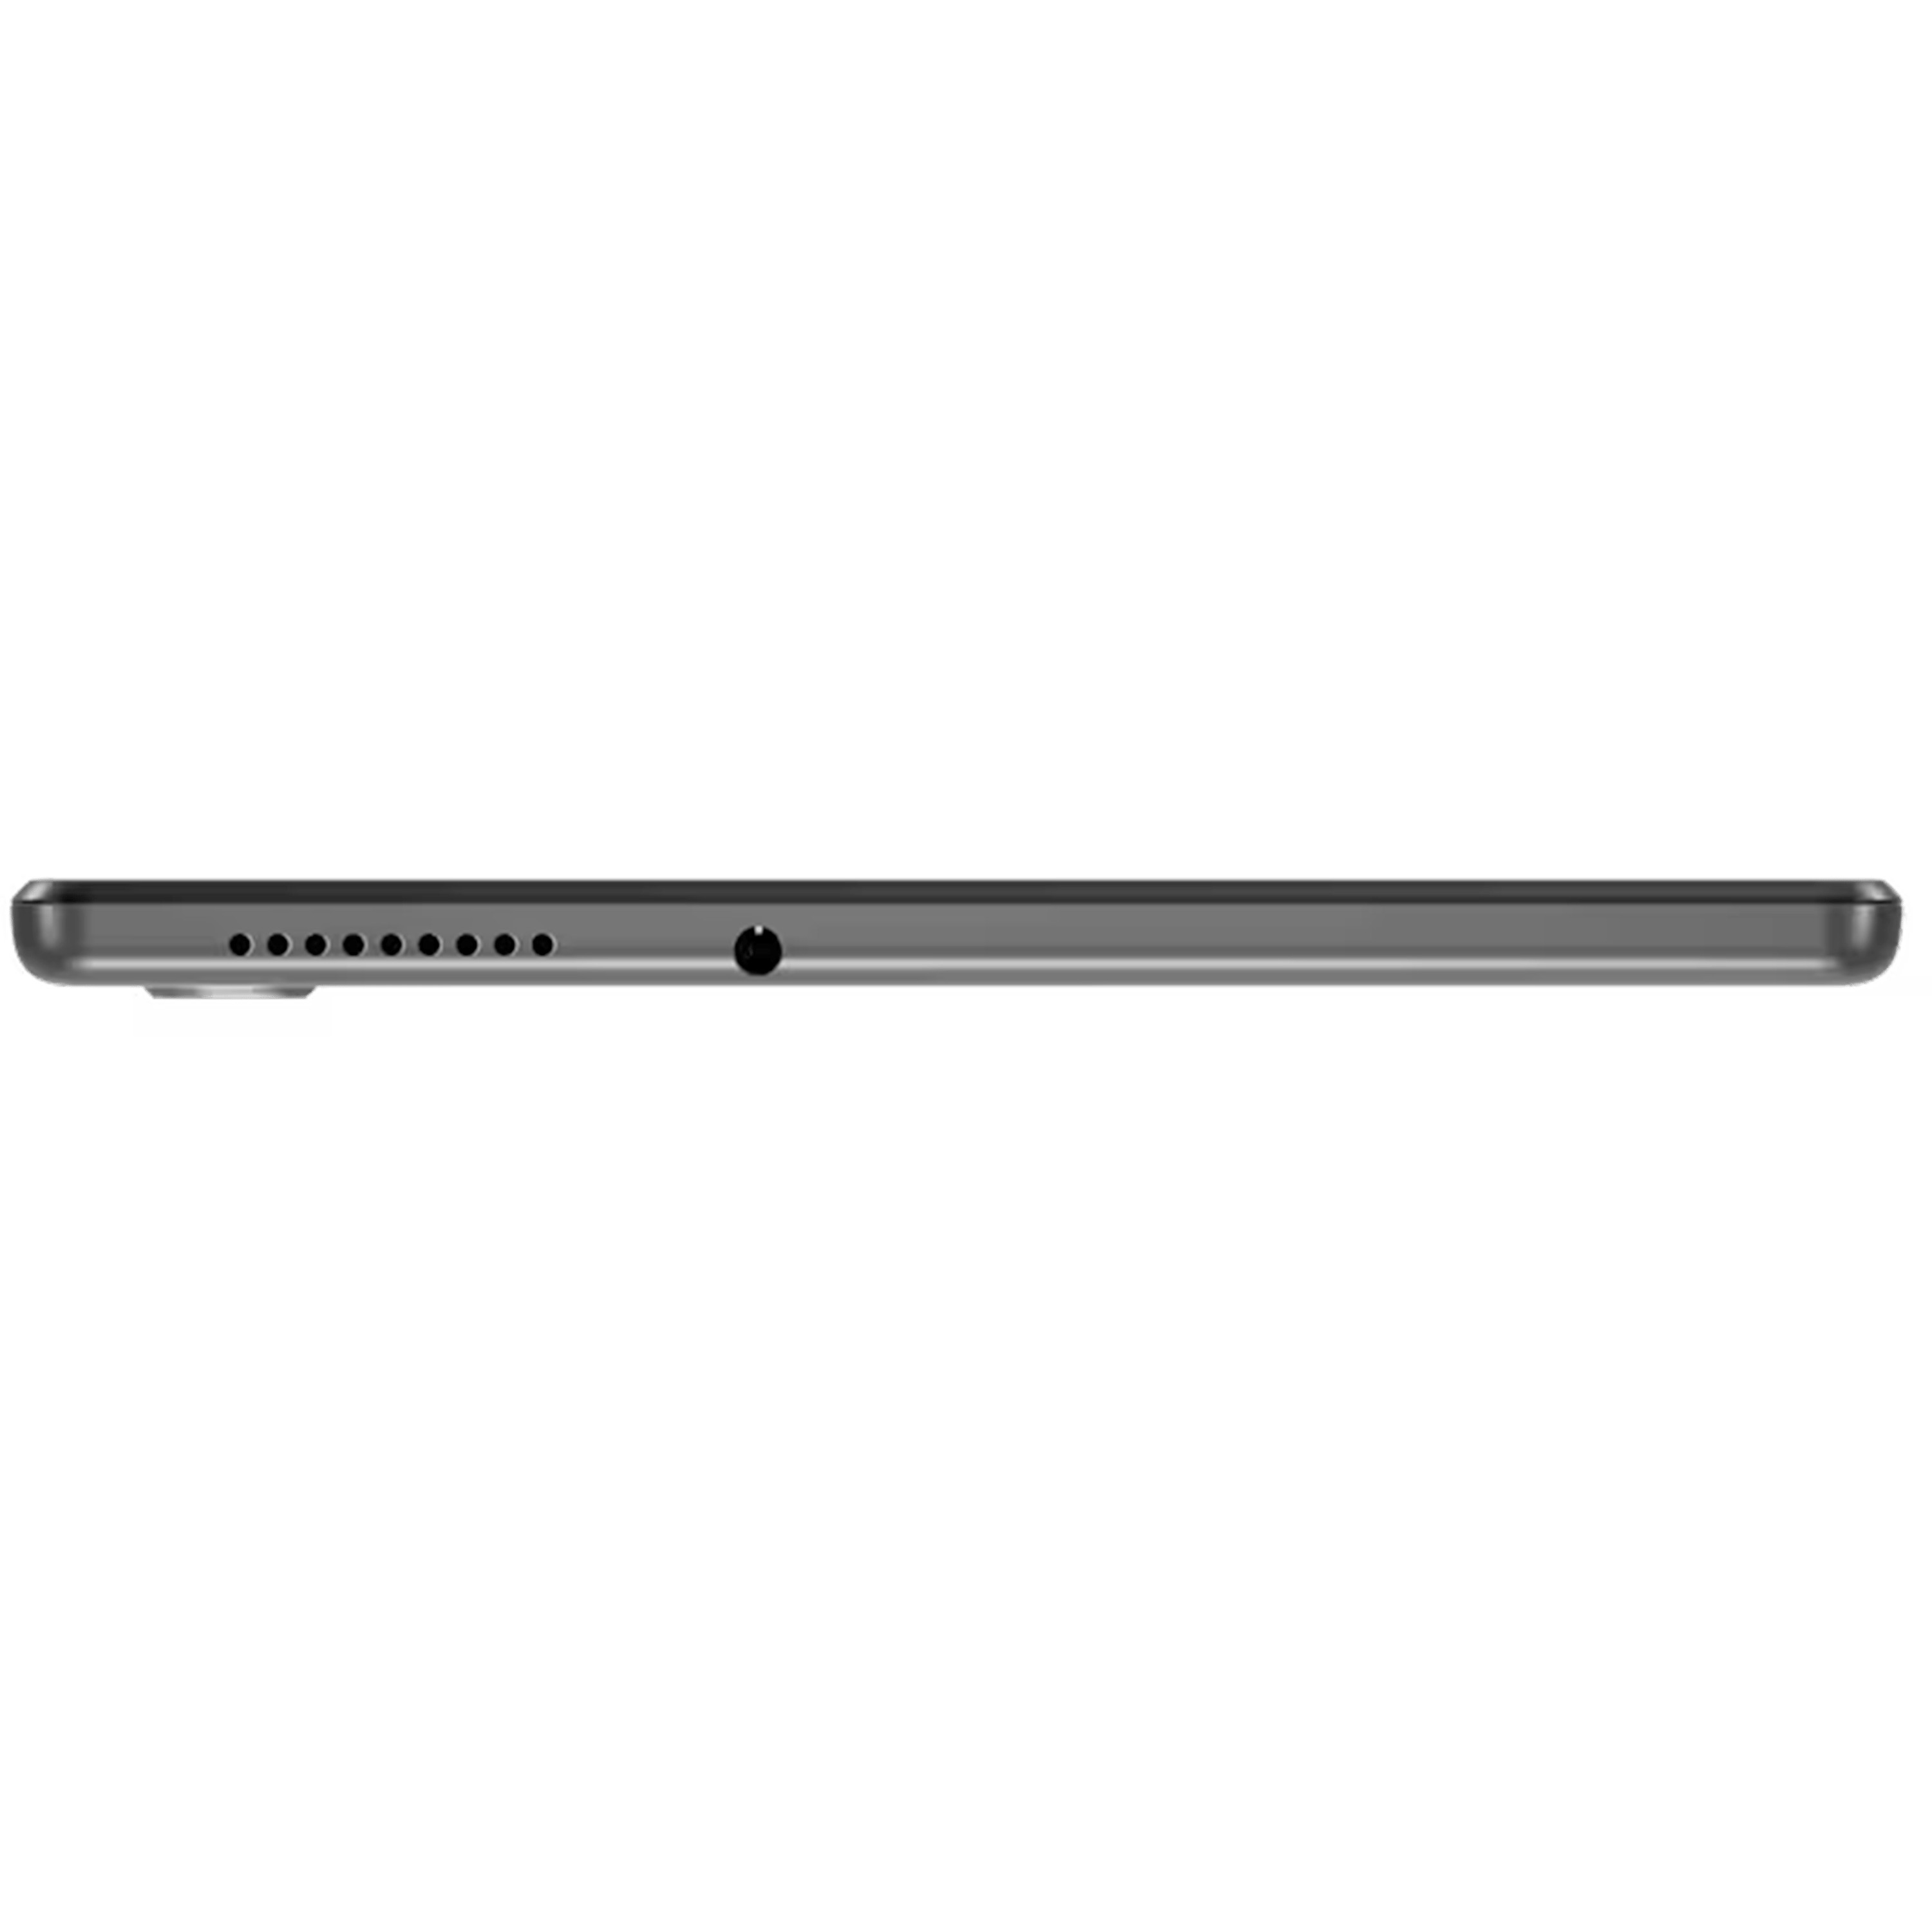 טאבלט Lenovo Tab M10 HD (2nd Gen) ZA6V0243IL 10.1